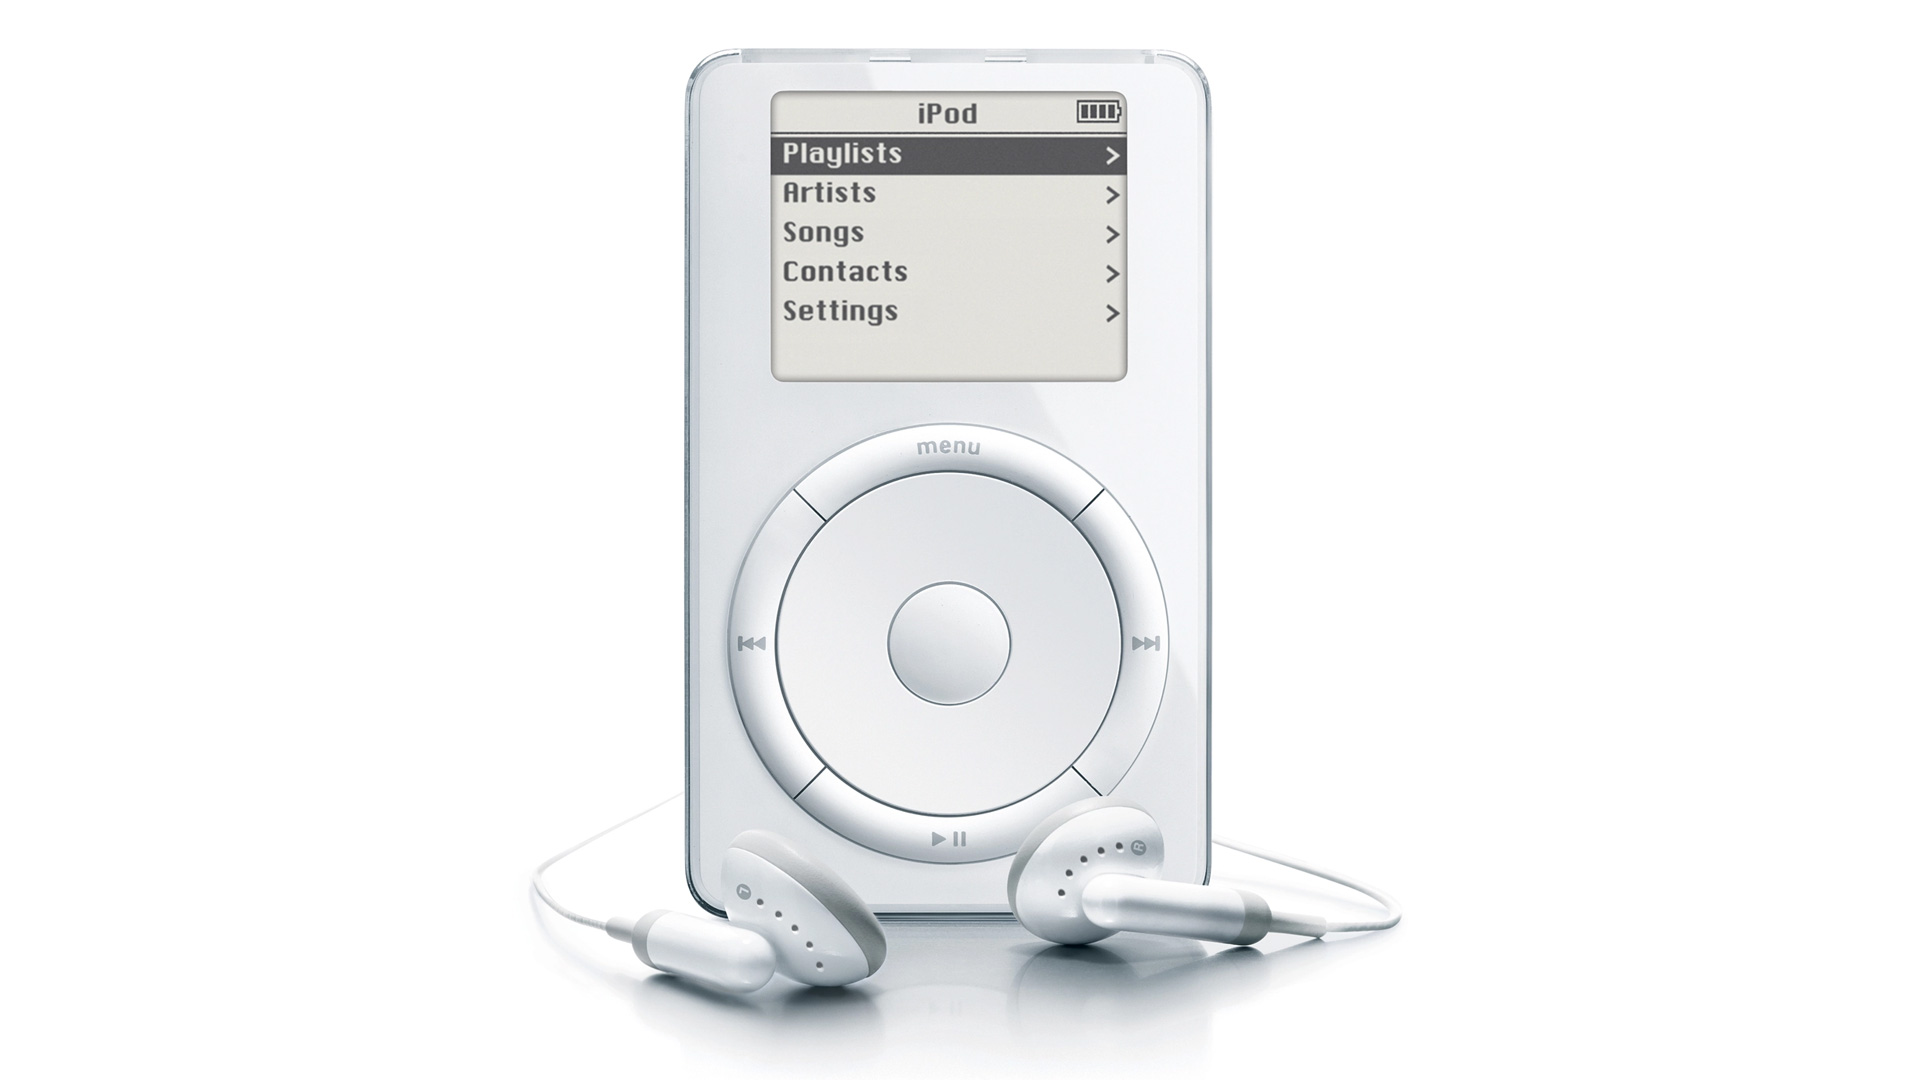 First generation iPod.